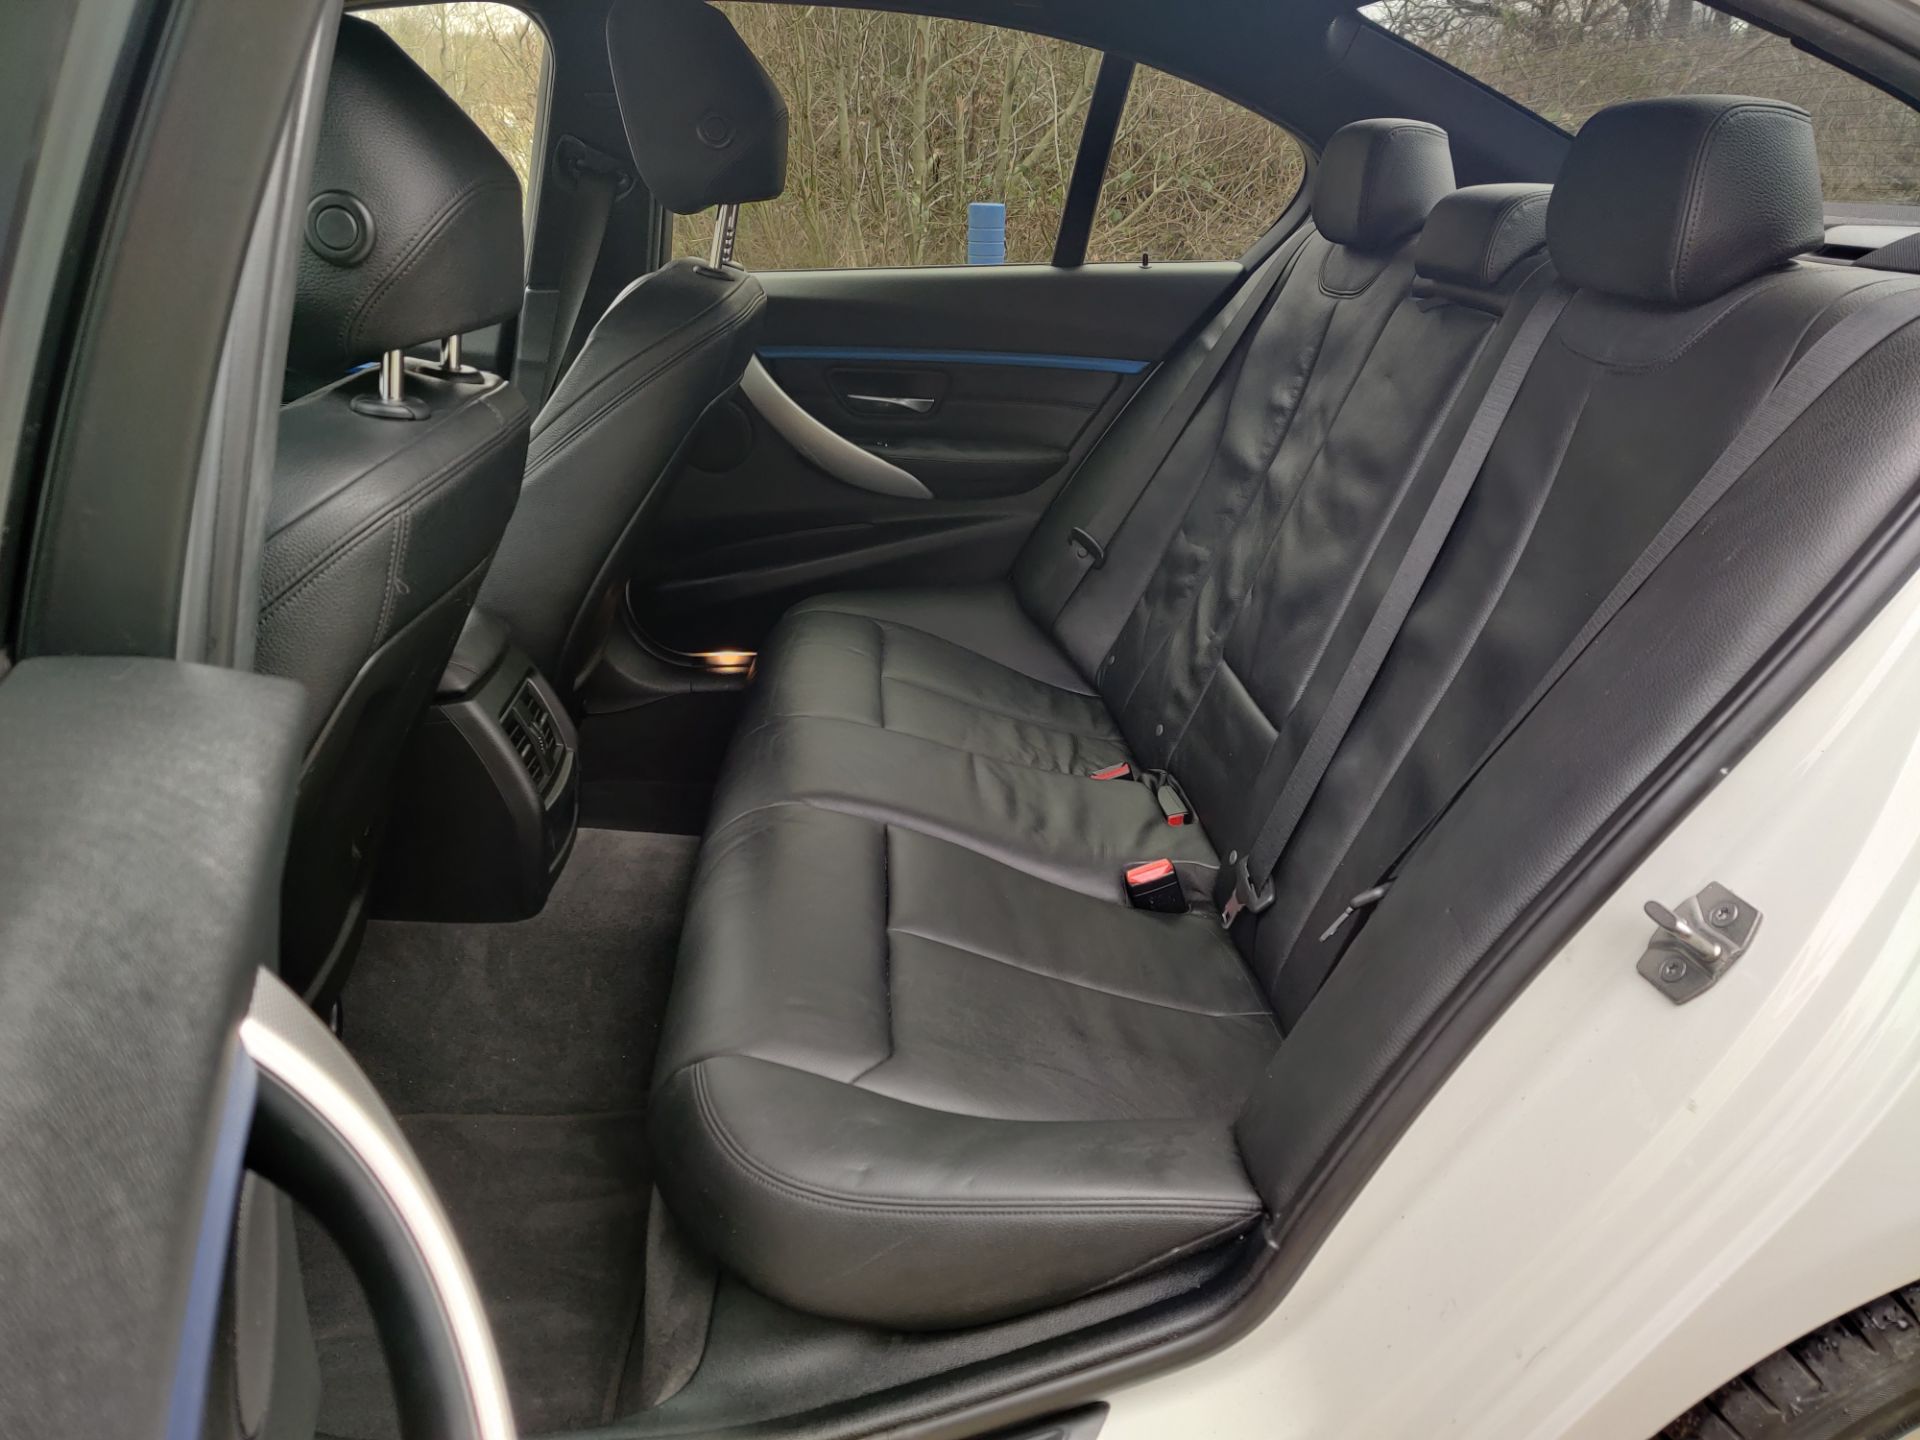 2015/65 REG BMW 318D M SPORT 2.0 DIESEL WHITE 4 DOOR SALOON, SHOWING 0 FORMER KEEPERS *NO VAT* - Image 10 of 23